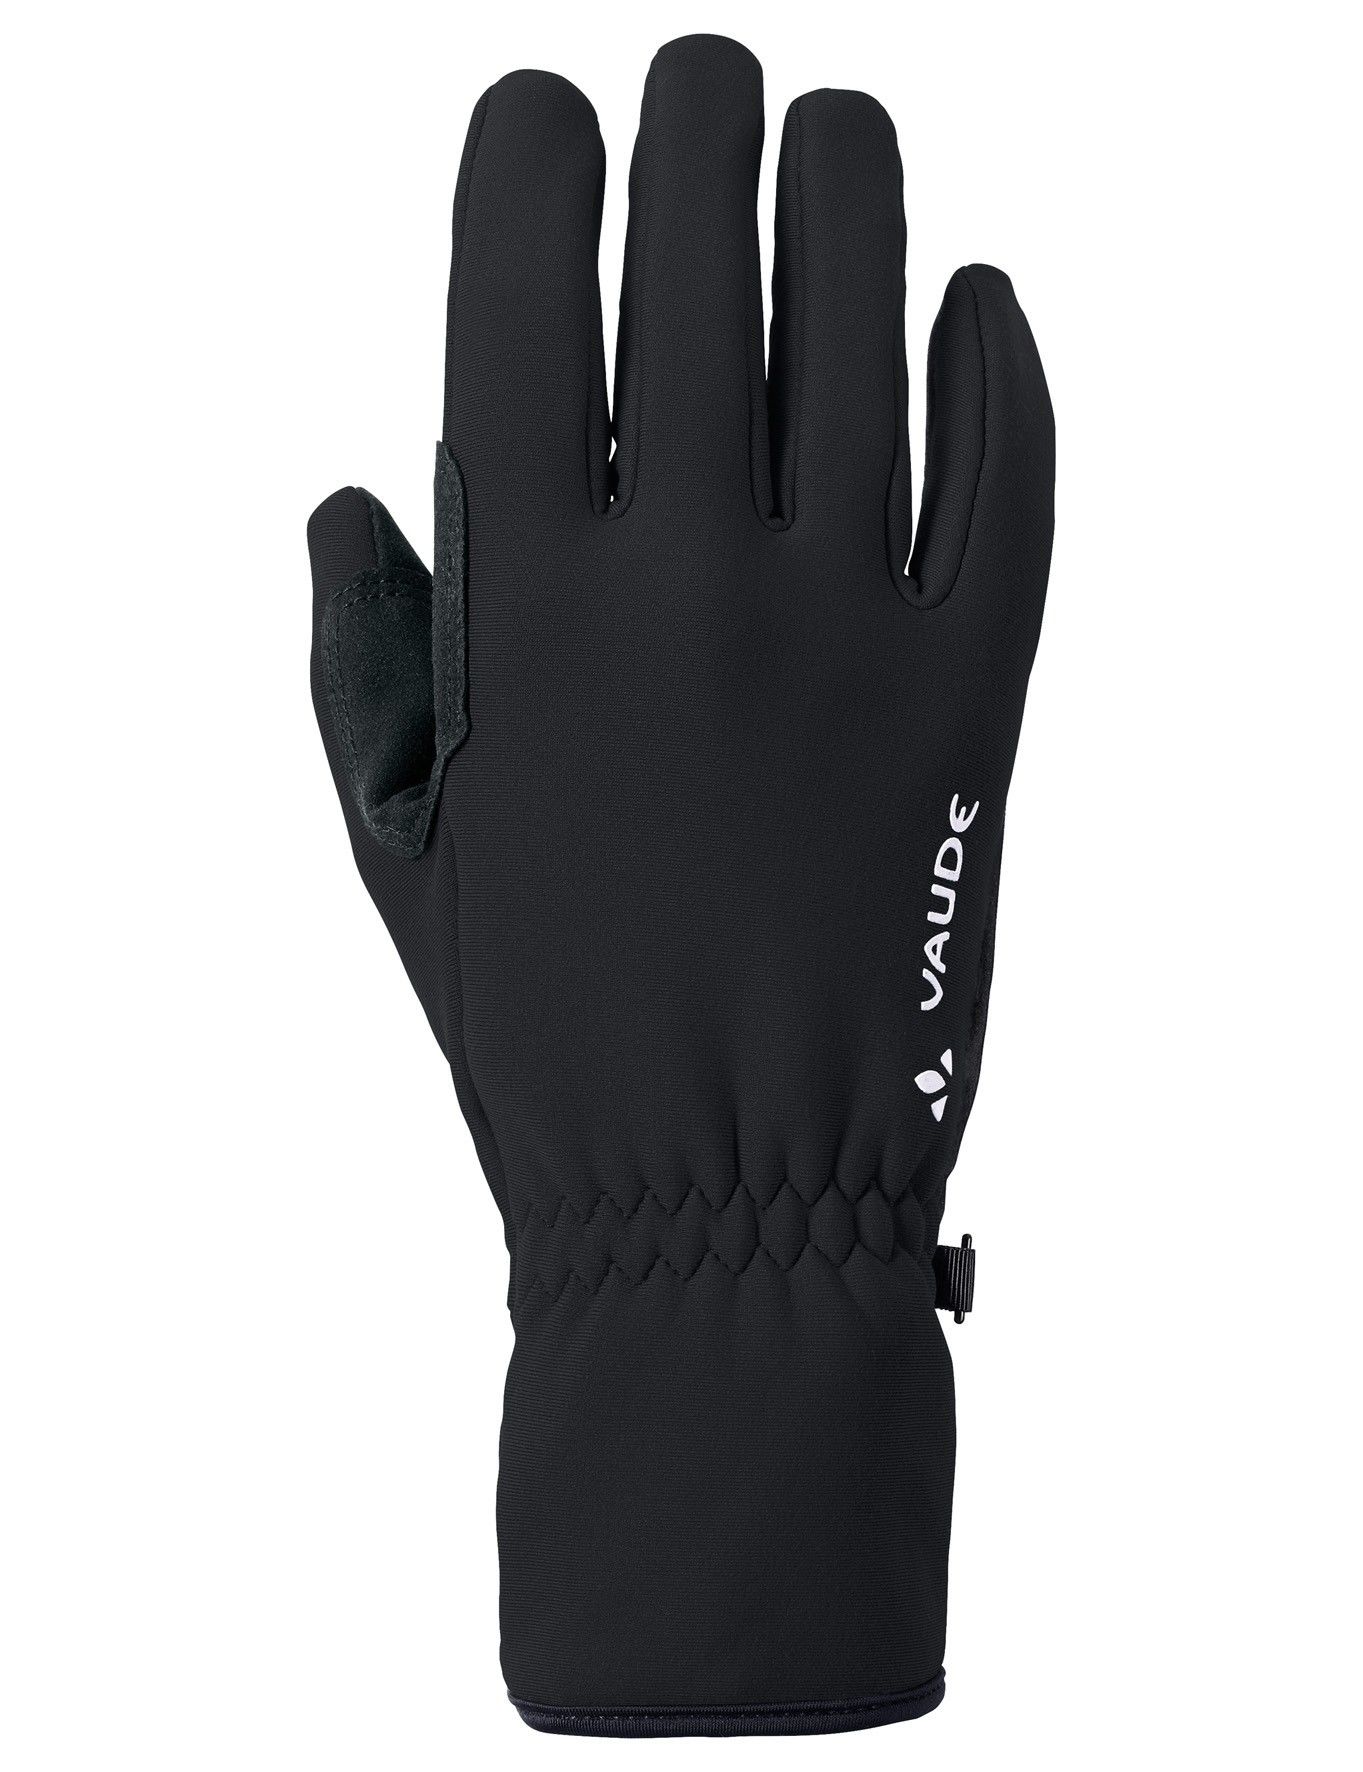 Vaude Basodino Gloves II Schwarz- Fingerhandschuhe- Grsse 8 - Farbe Black unter Vaude